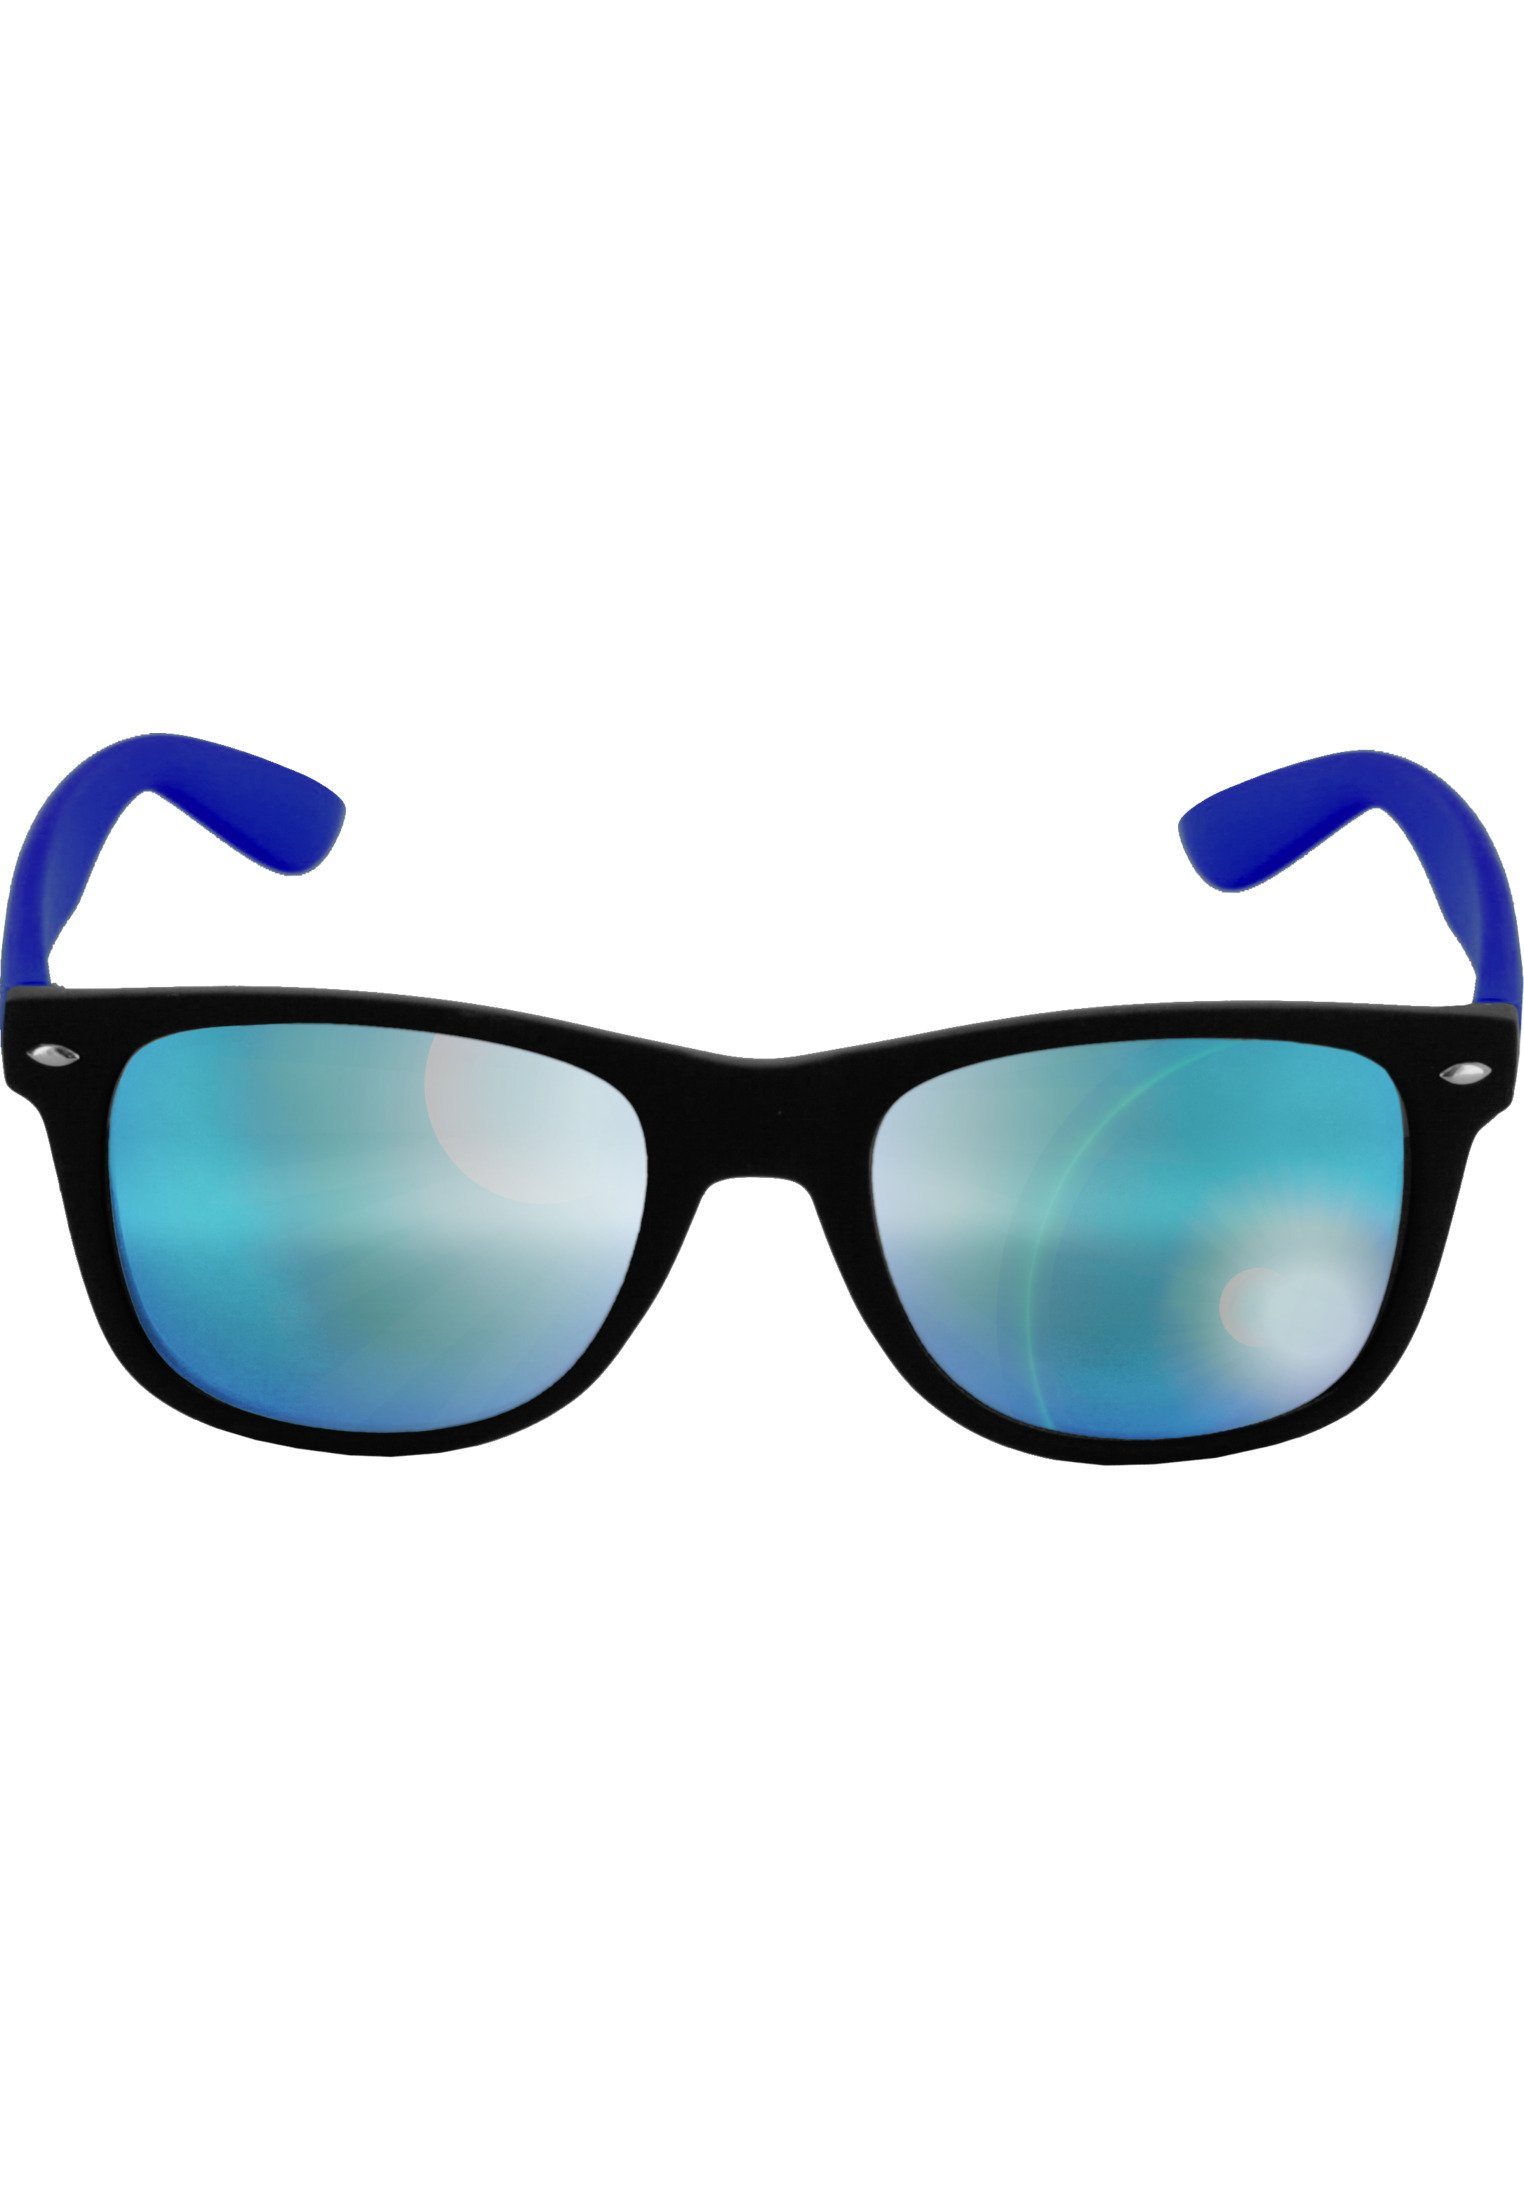 MSTRDS Sonnenbrille Accessoires Sunglasses blk/royal/blue Likoma Mirror